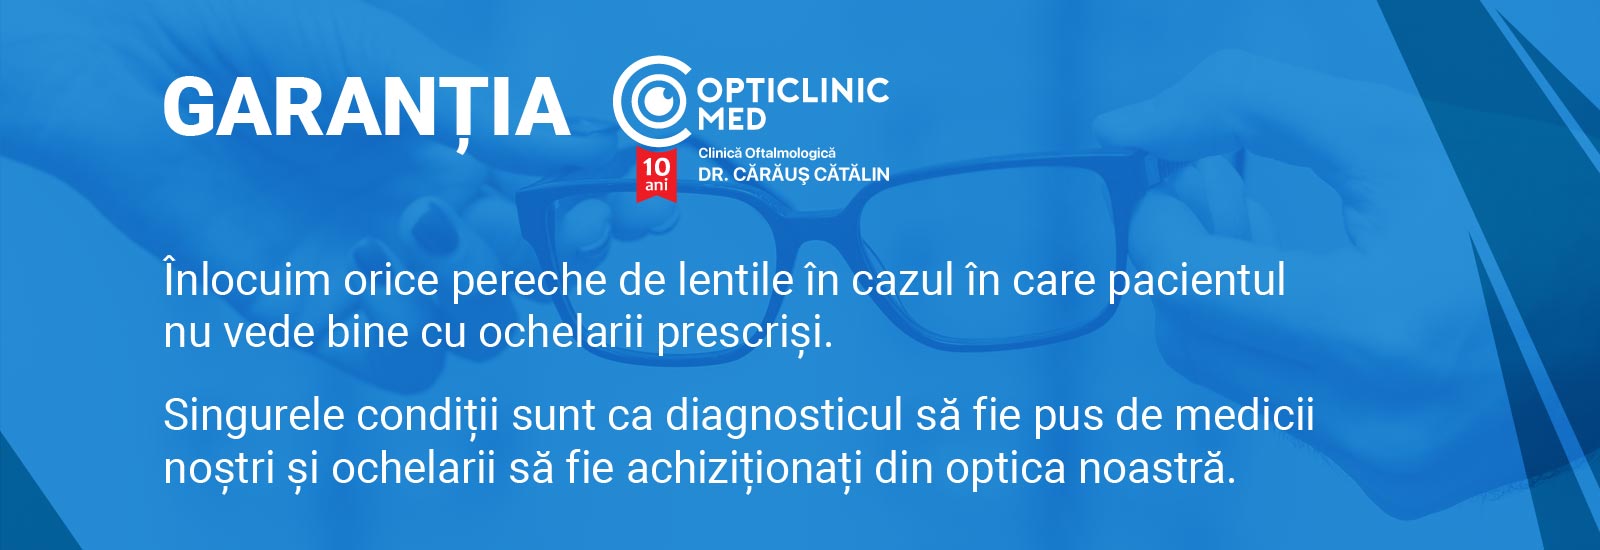 garantia opticlinic med act medical